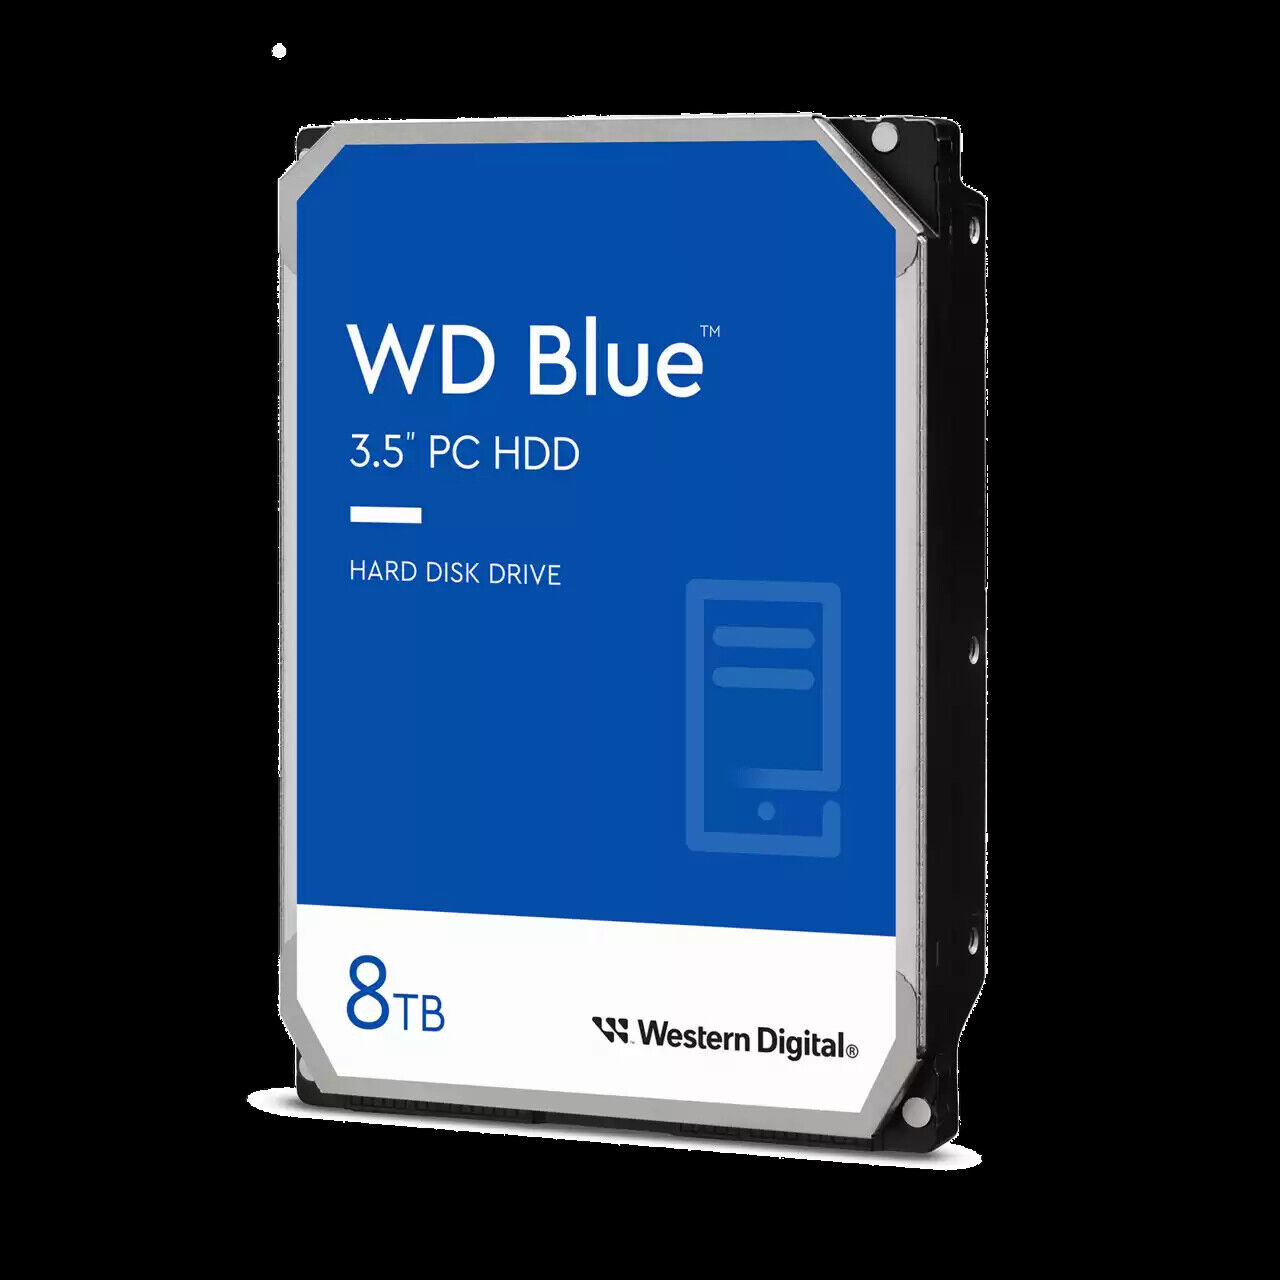 Western Digital 8TB WD Blue PC Internal Hard Drive HDD - WD80EAAZ